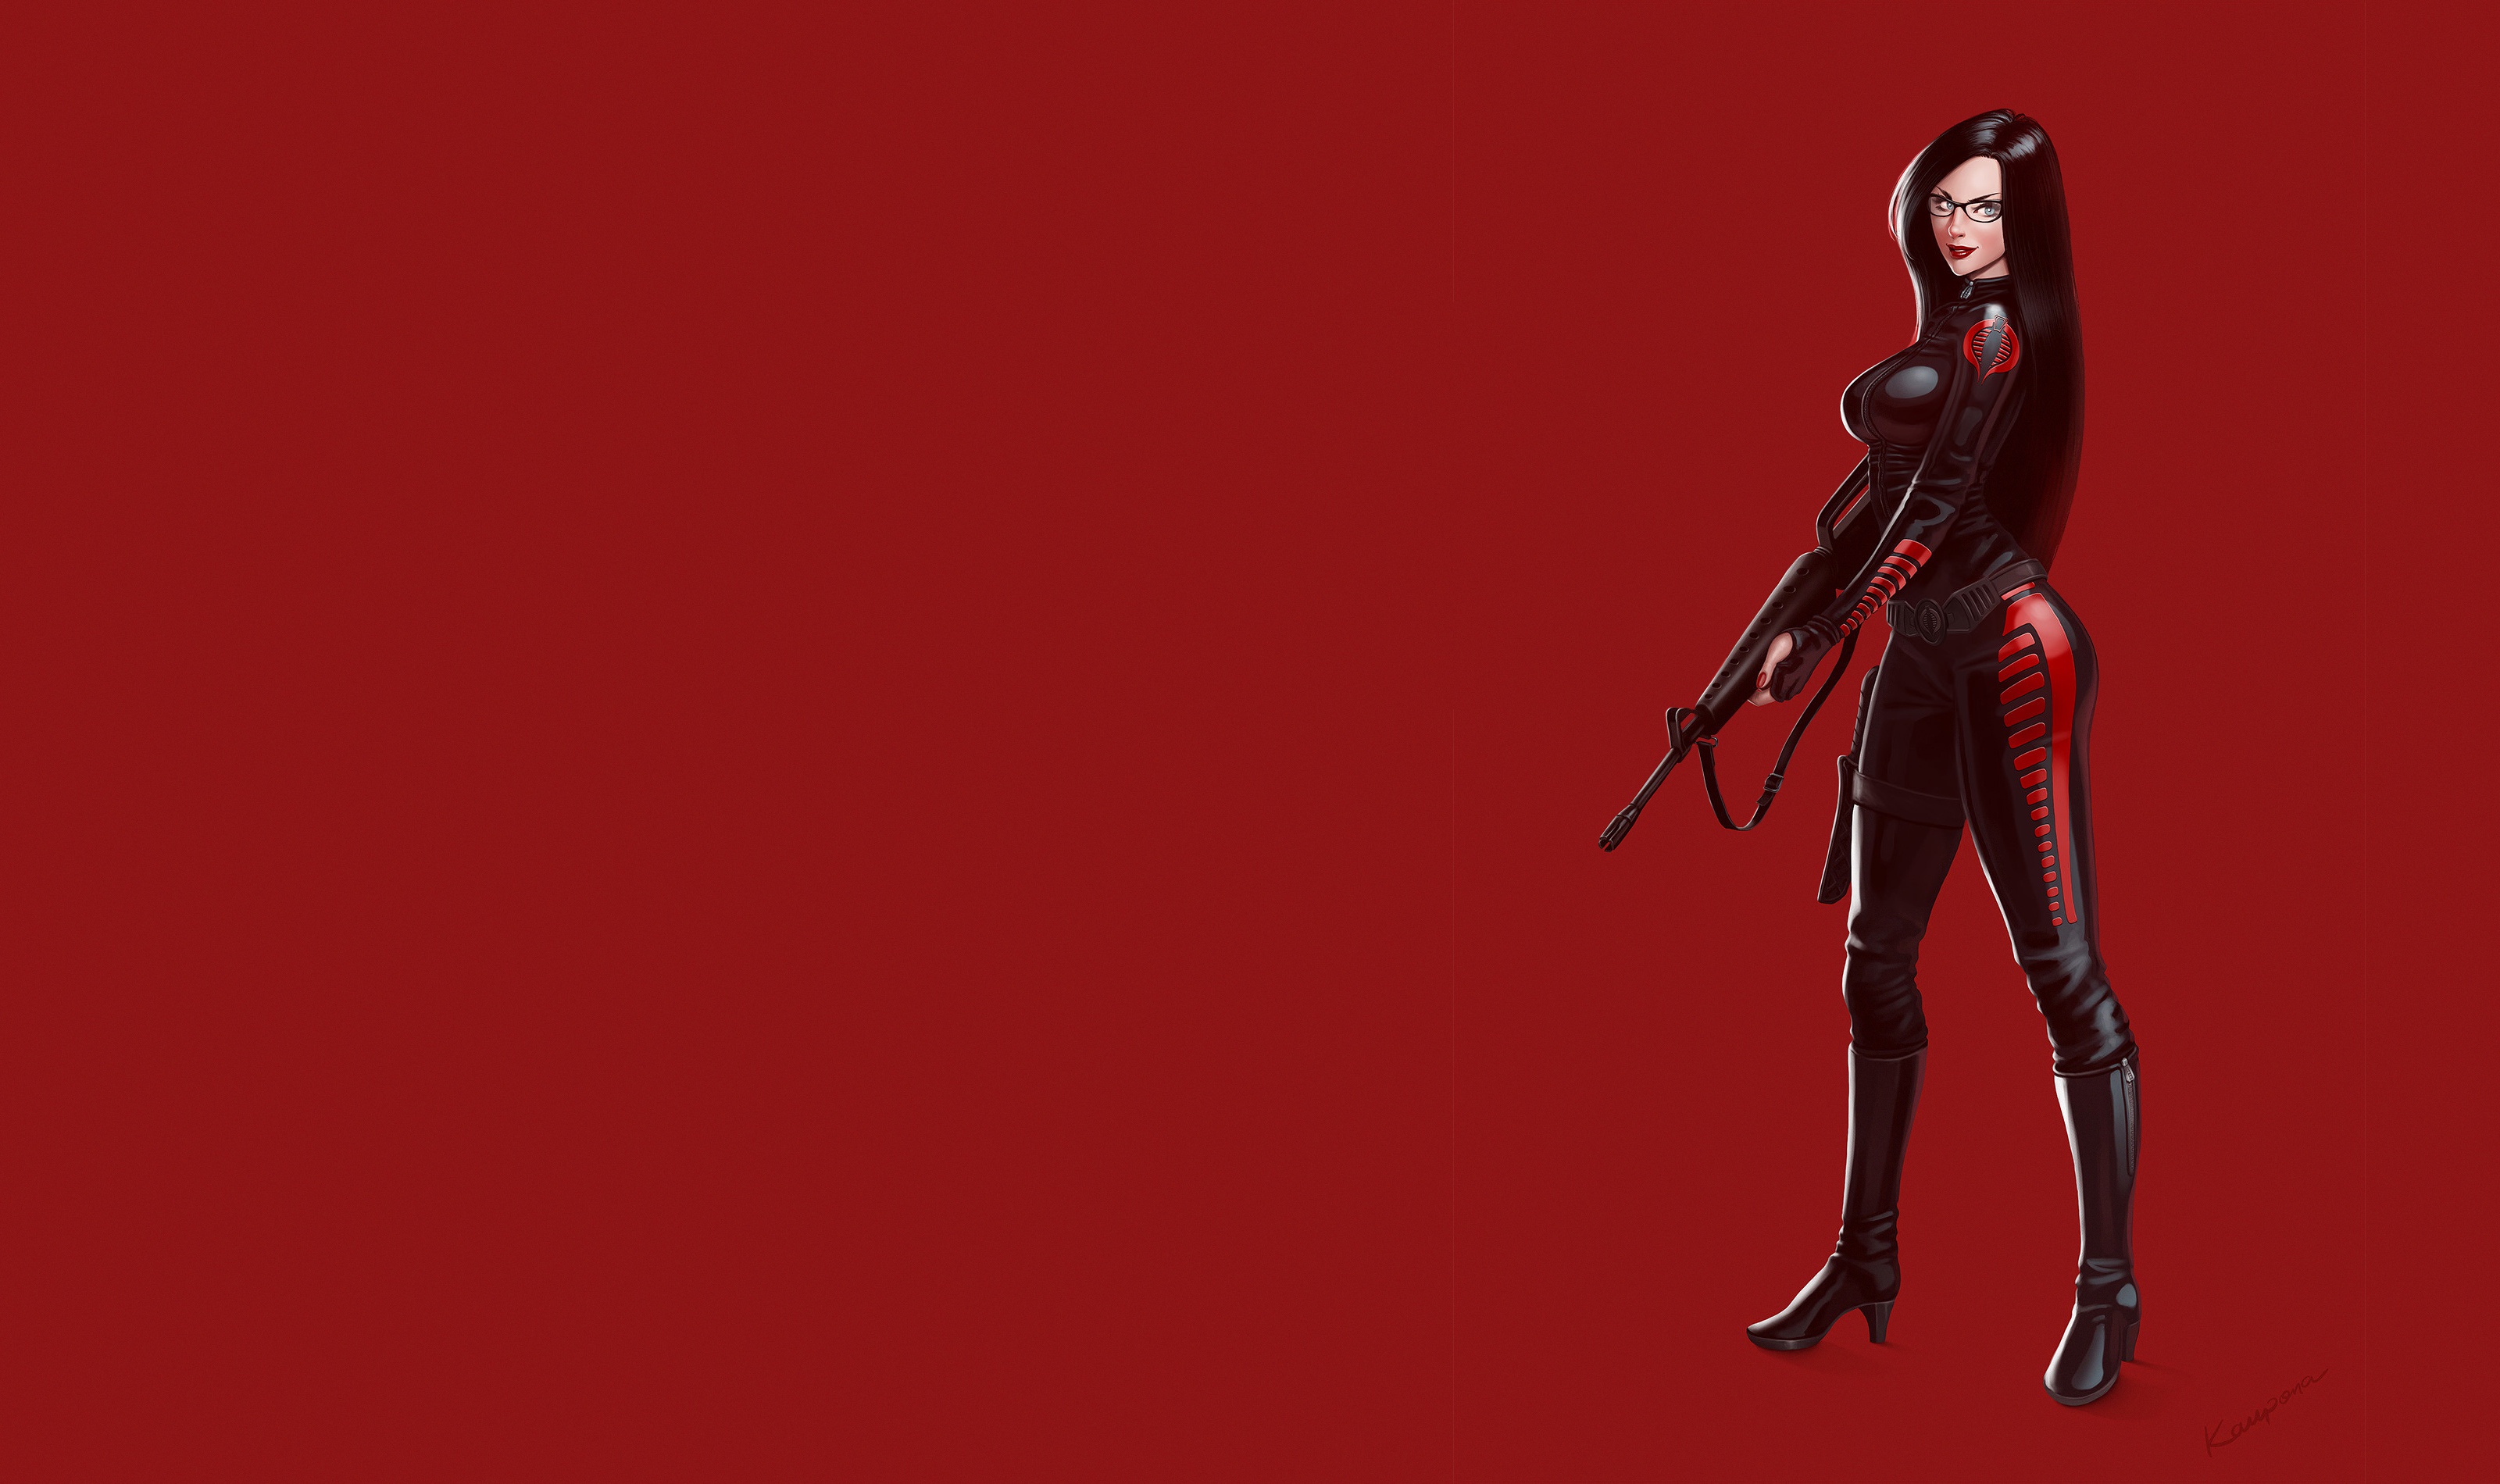 General 3200x1900 women artwork weapon red background dark hair boots Baroness G.I. Joe girls with guns red